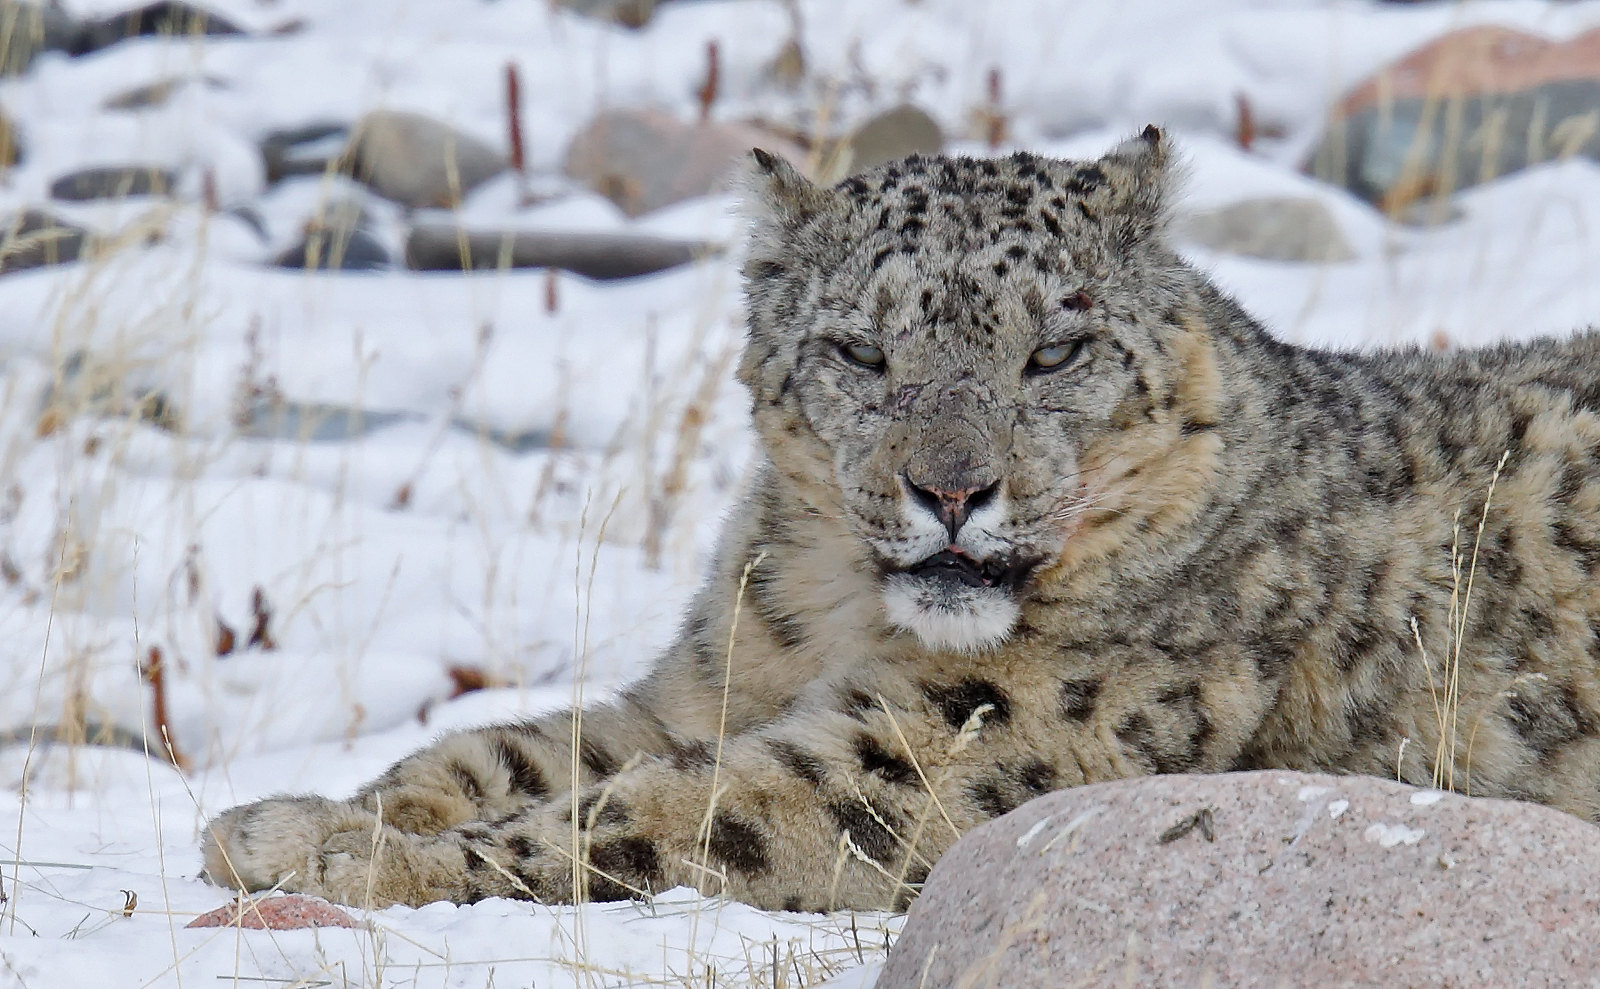 Snow Leopard / Panthera uncia - male